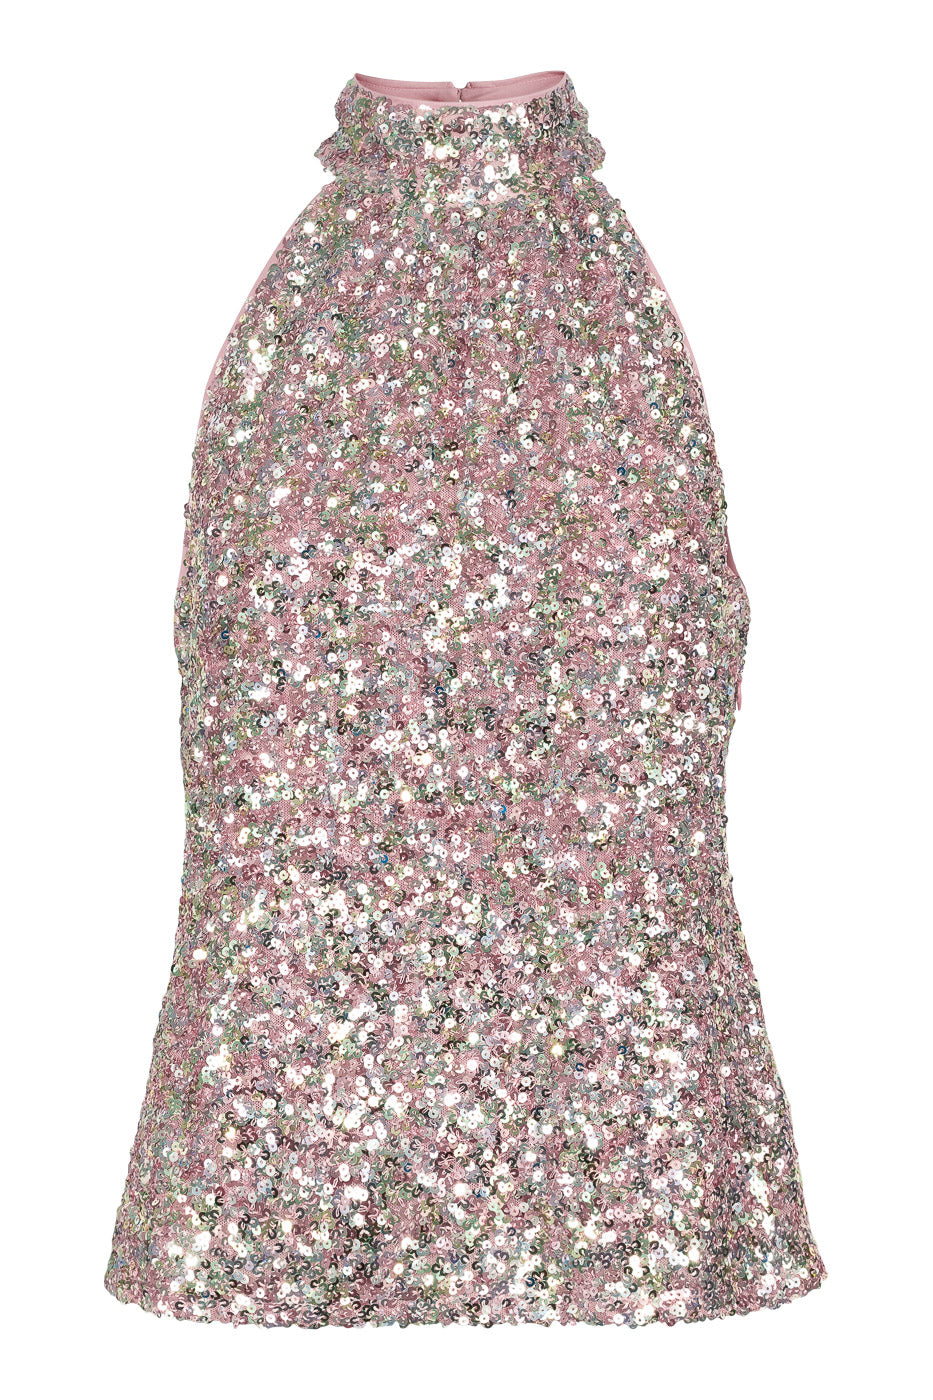 Lupita Top Pink Sequin